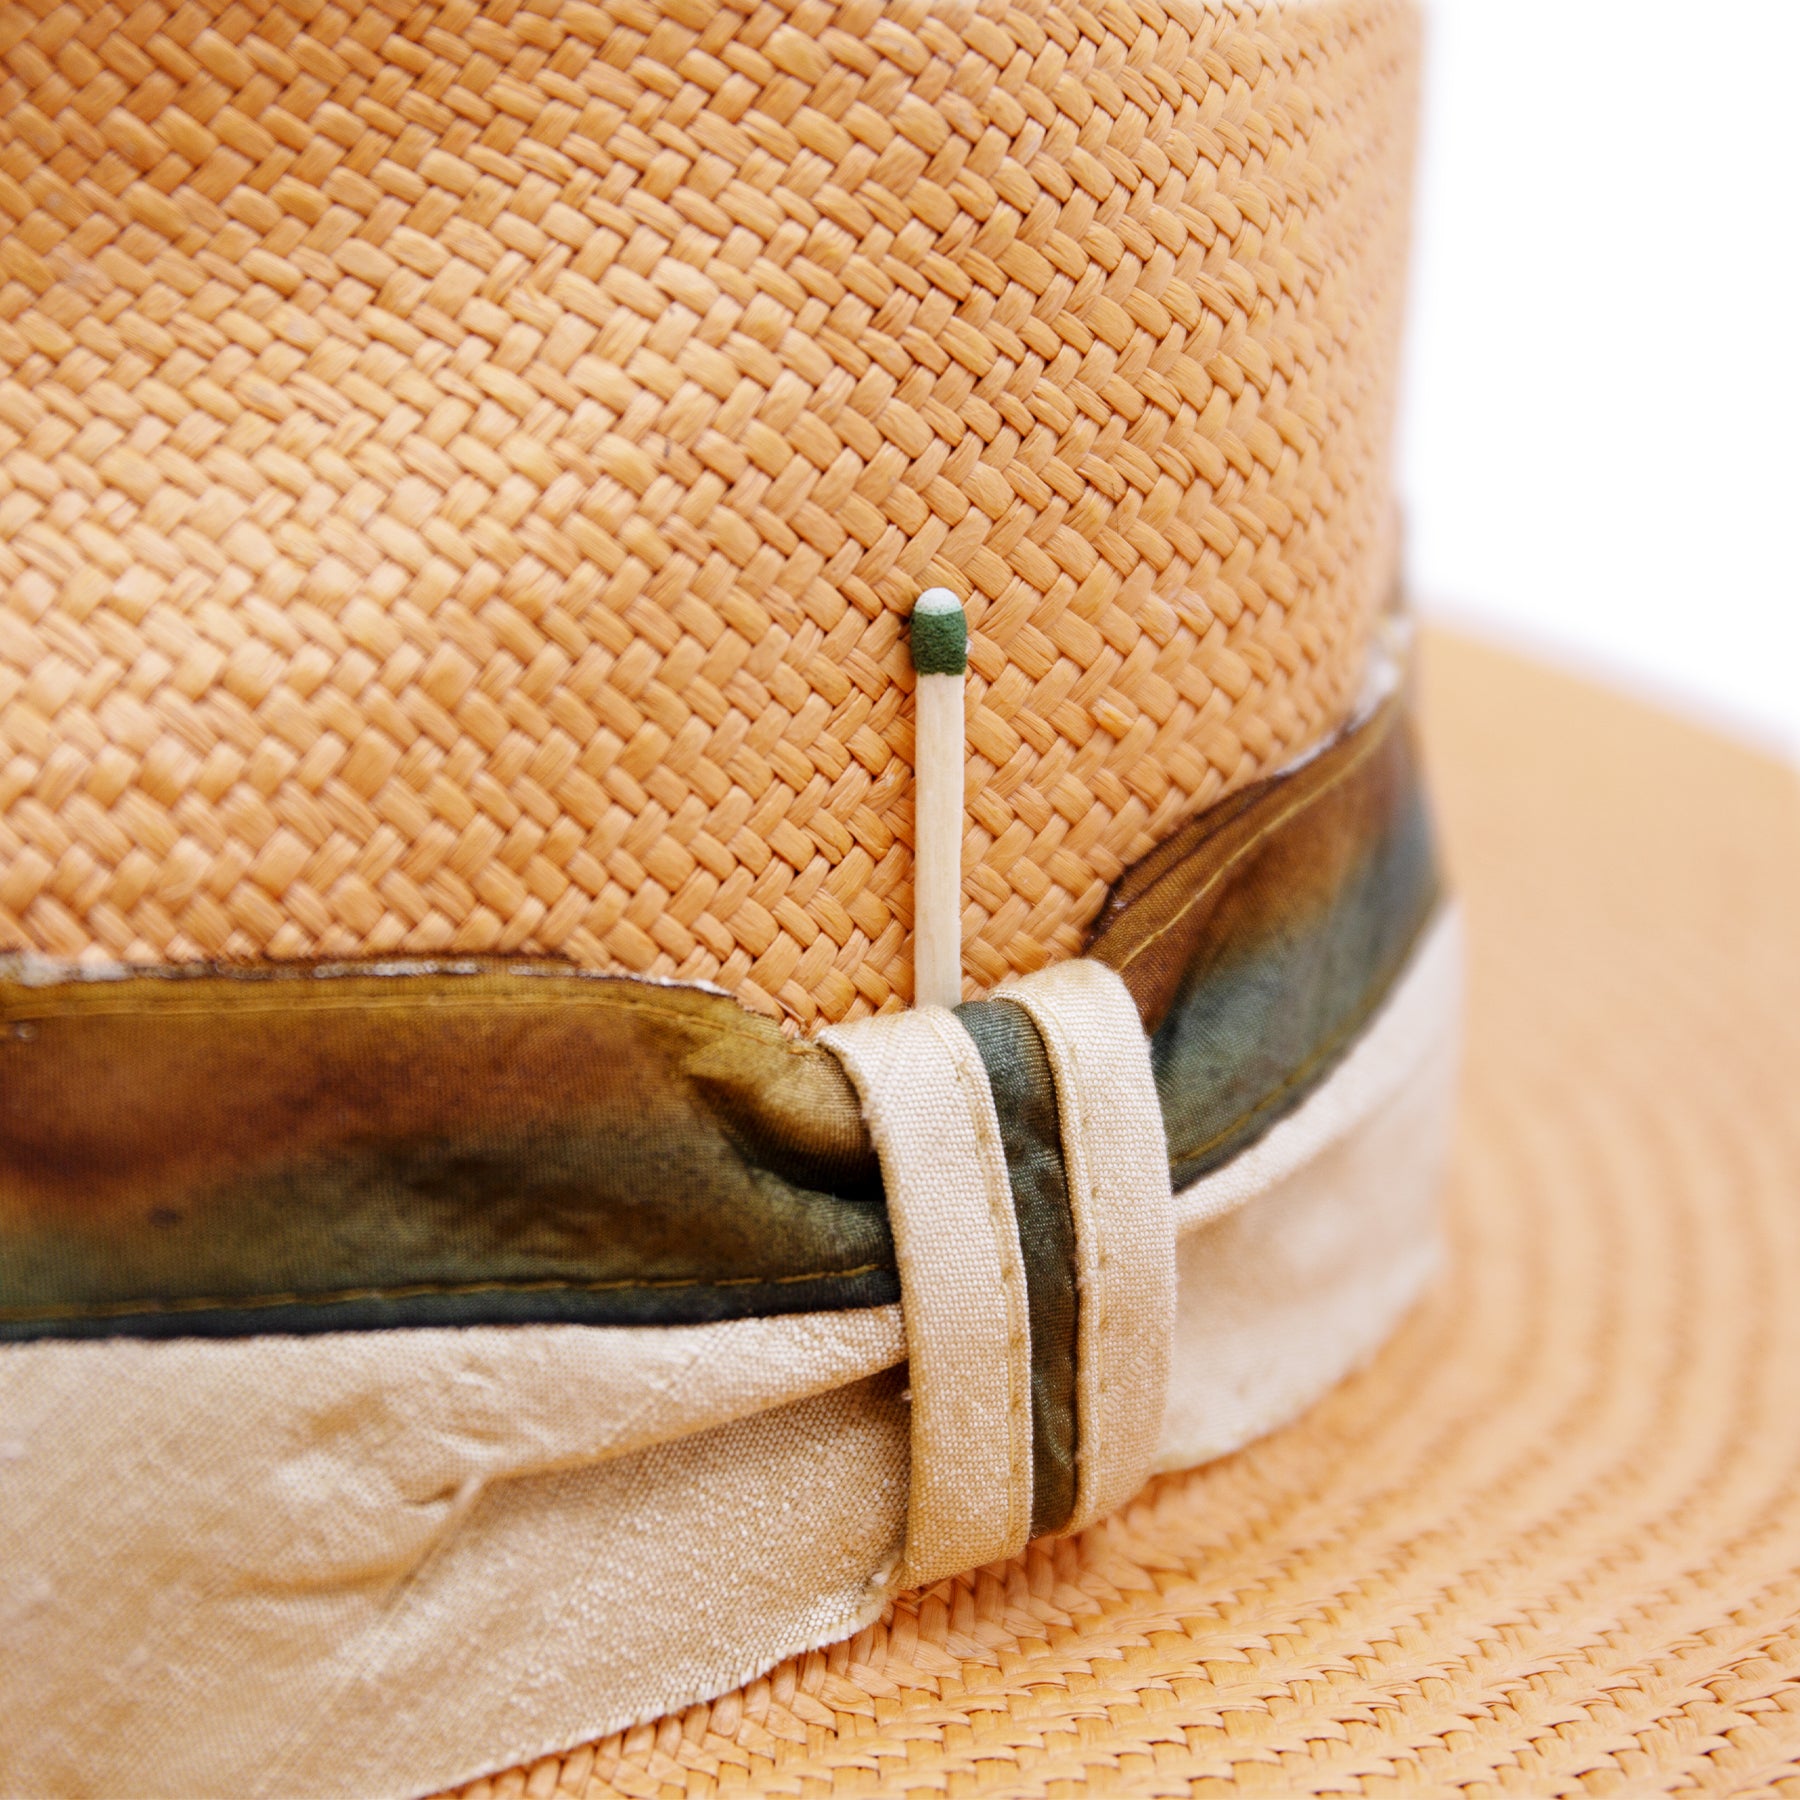 100%  Ecuadorian straw hat  in Pale Orange   2” Silk band with tie dyed silk binding  Woven in Ecuador  Flat brim   Made in USA 